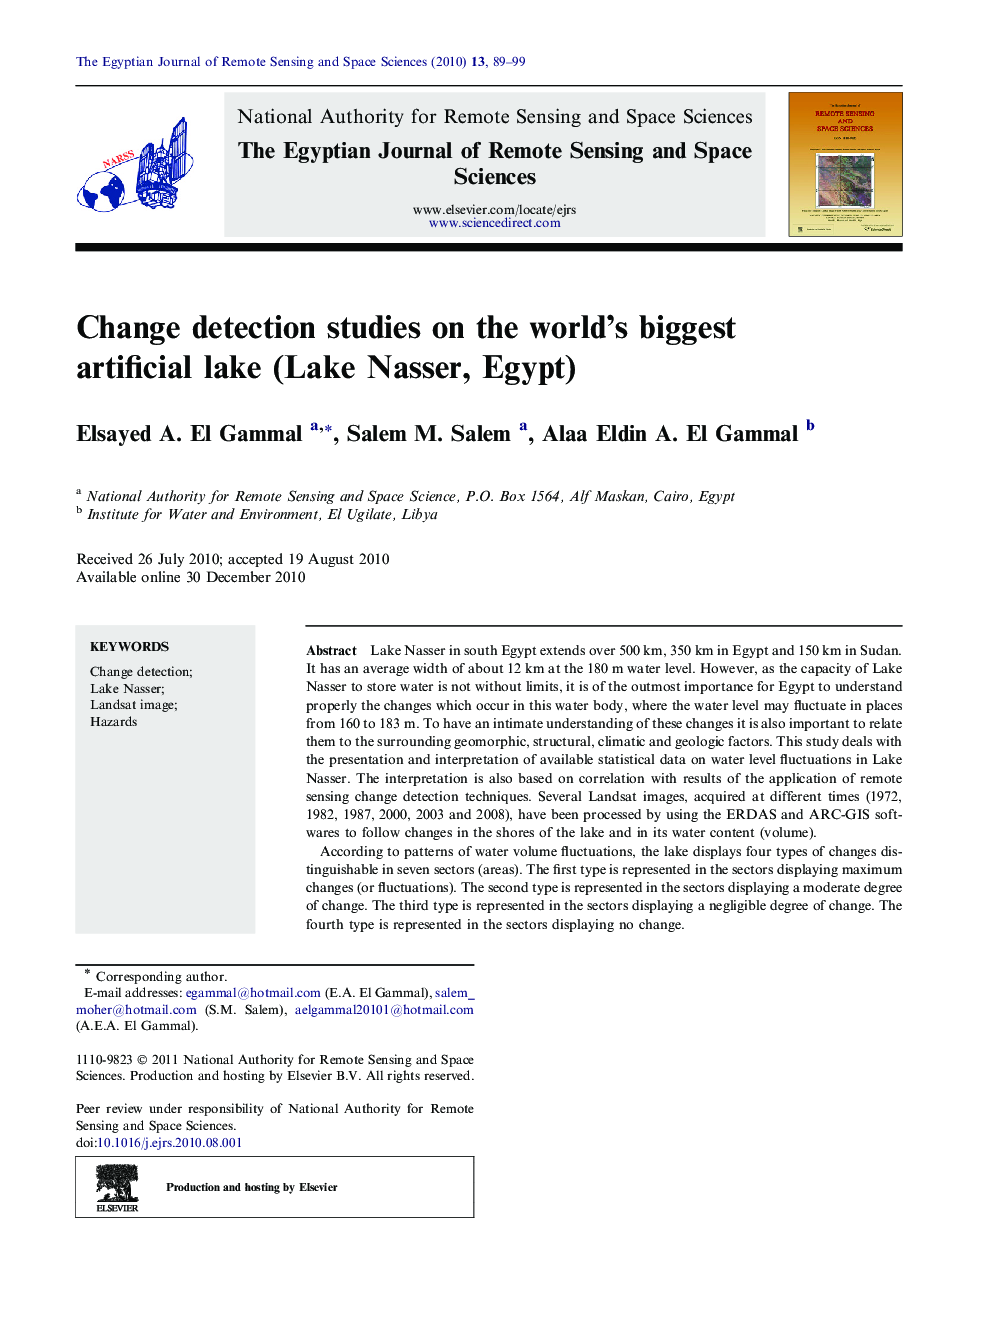 Change detection studies on the world’s biggest artificial lake (Lake Nasser, Egypt)